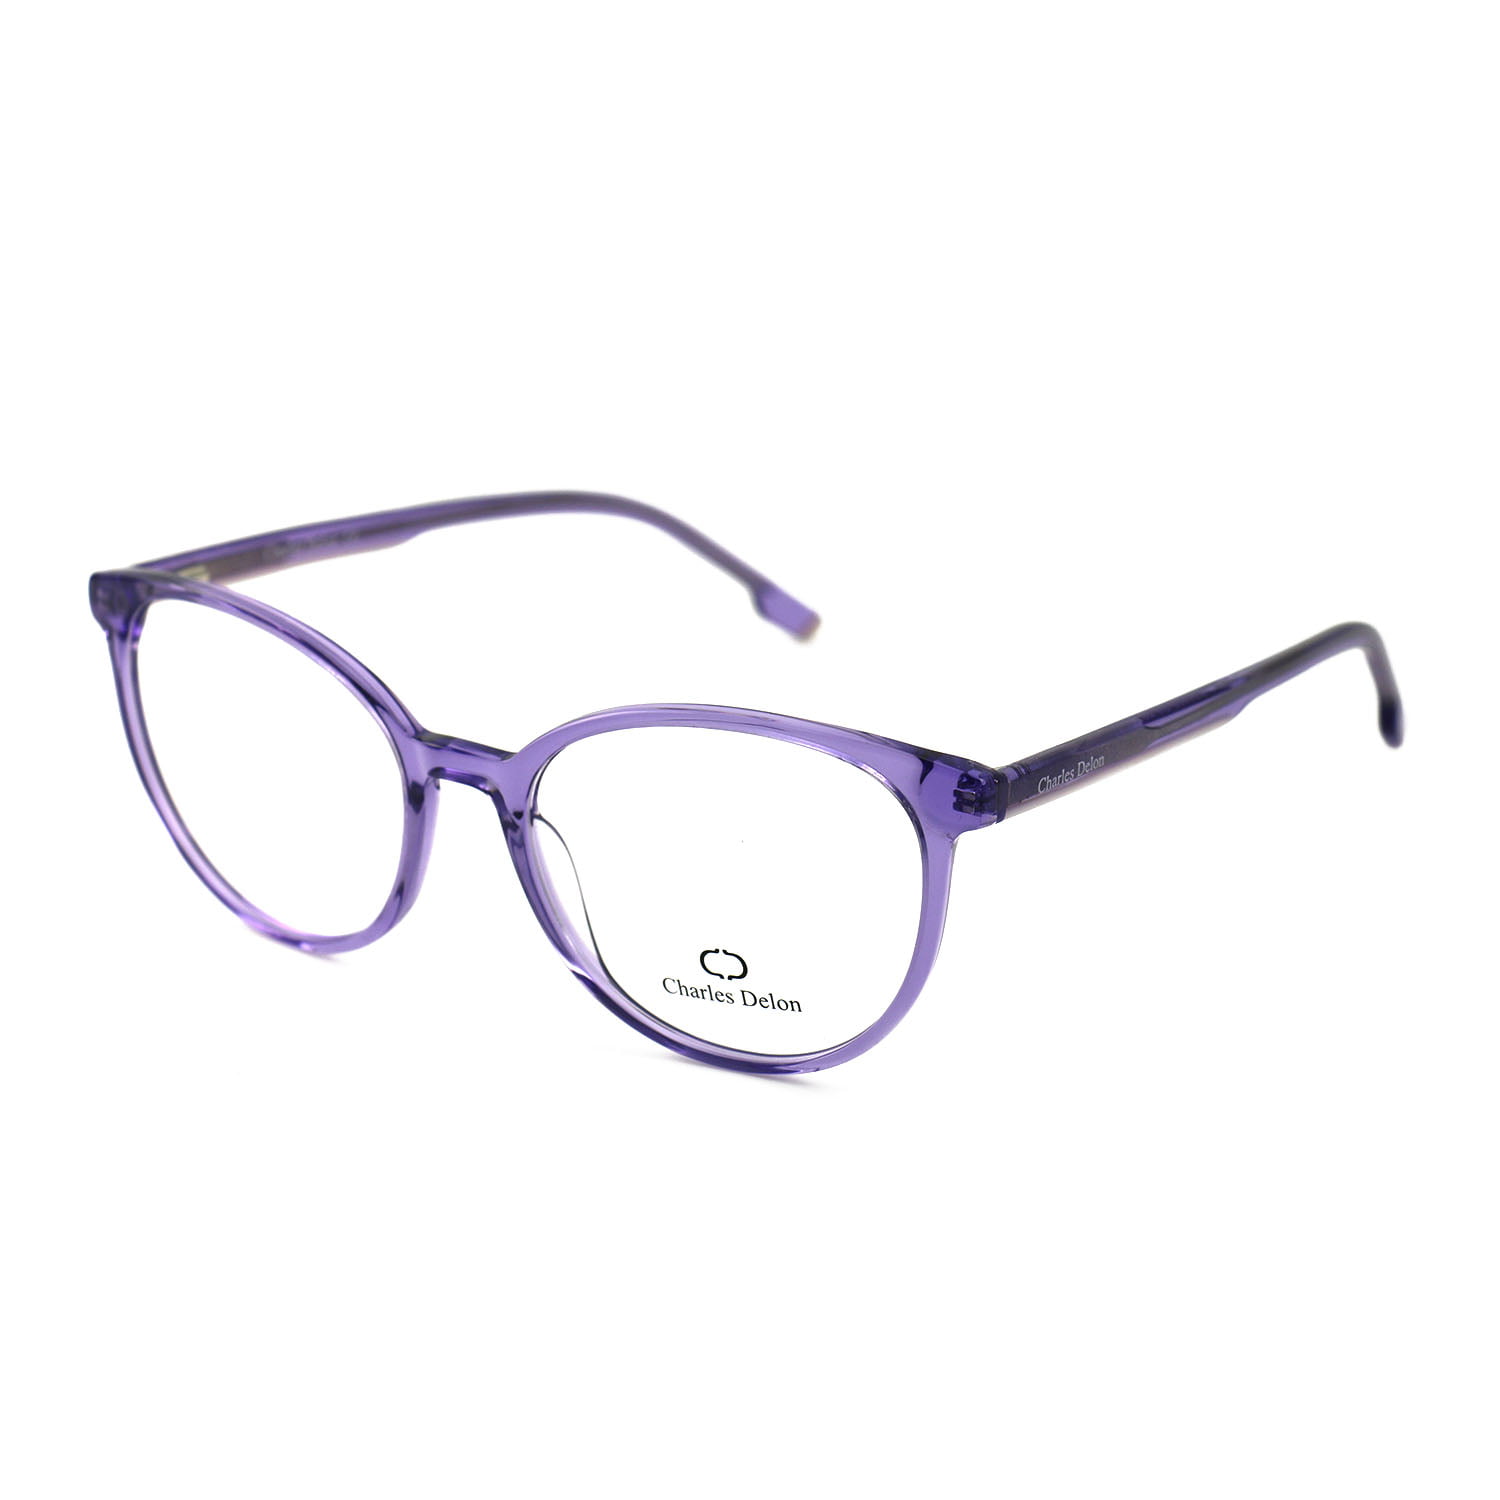 Eyeglasses Womens Clear Purple Frames Oval 52 18 140 By Charles Delon